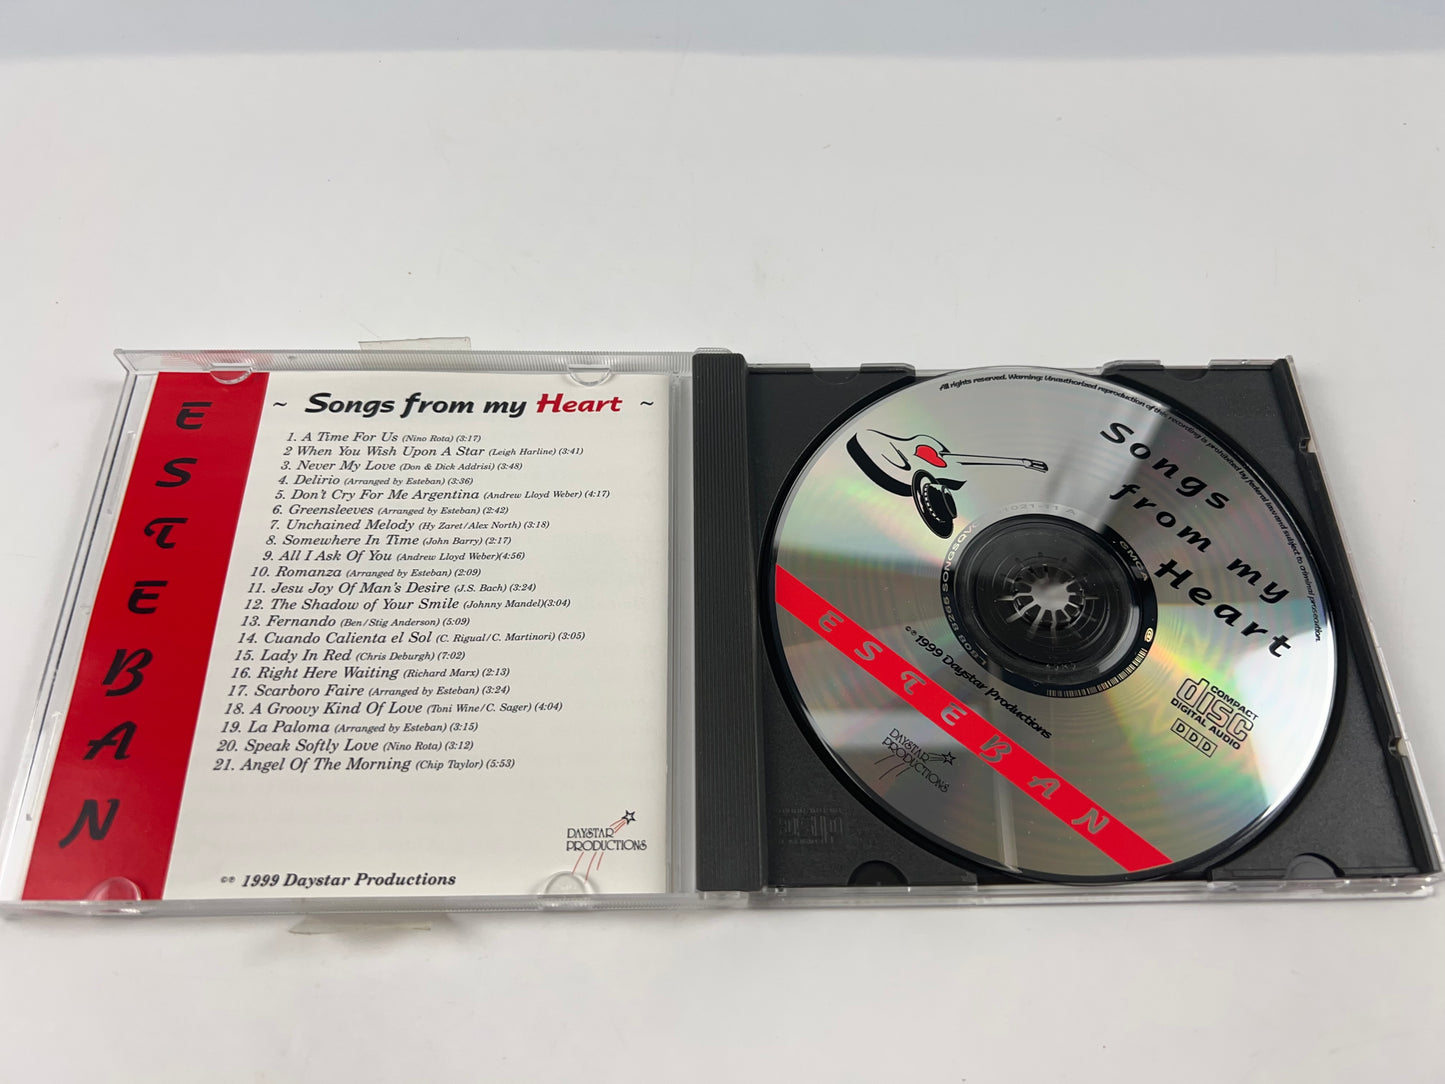 Esteban : Songs From My Heart CD